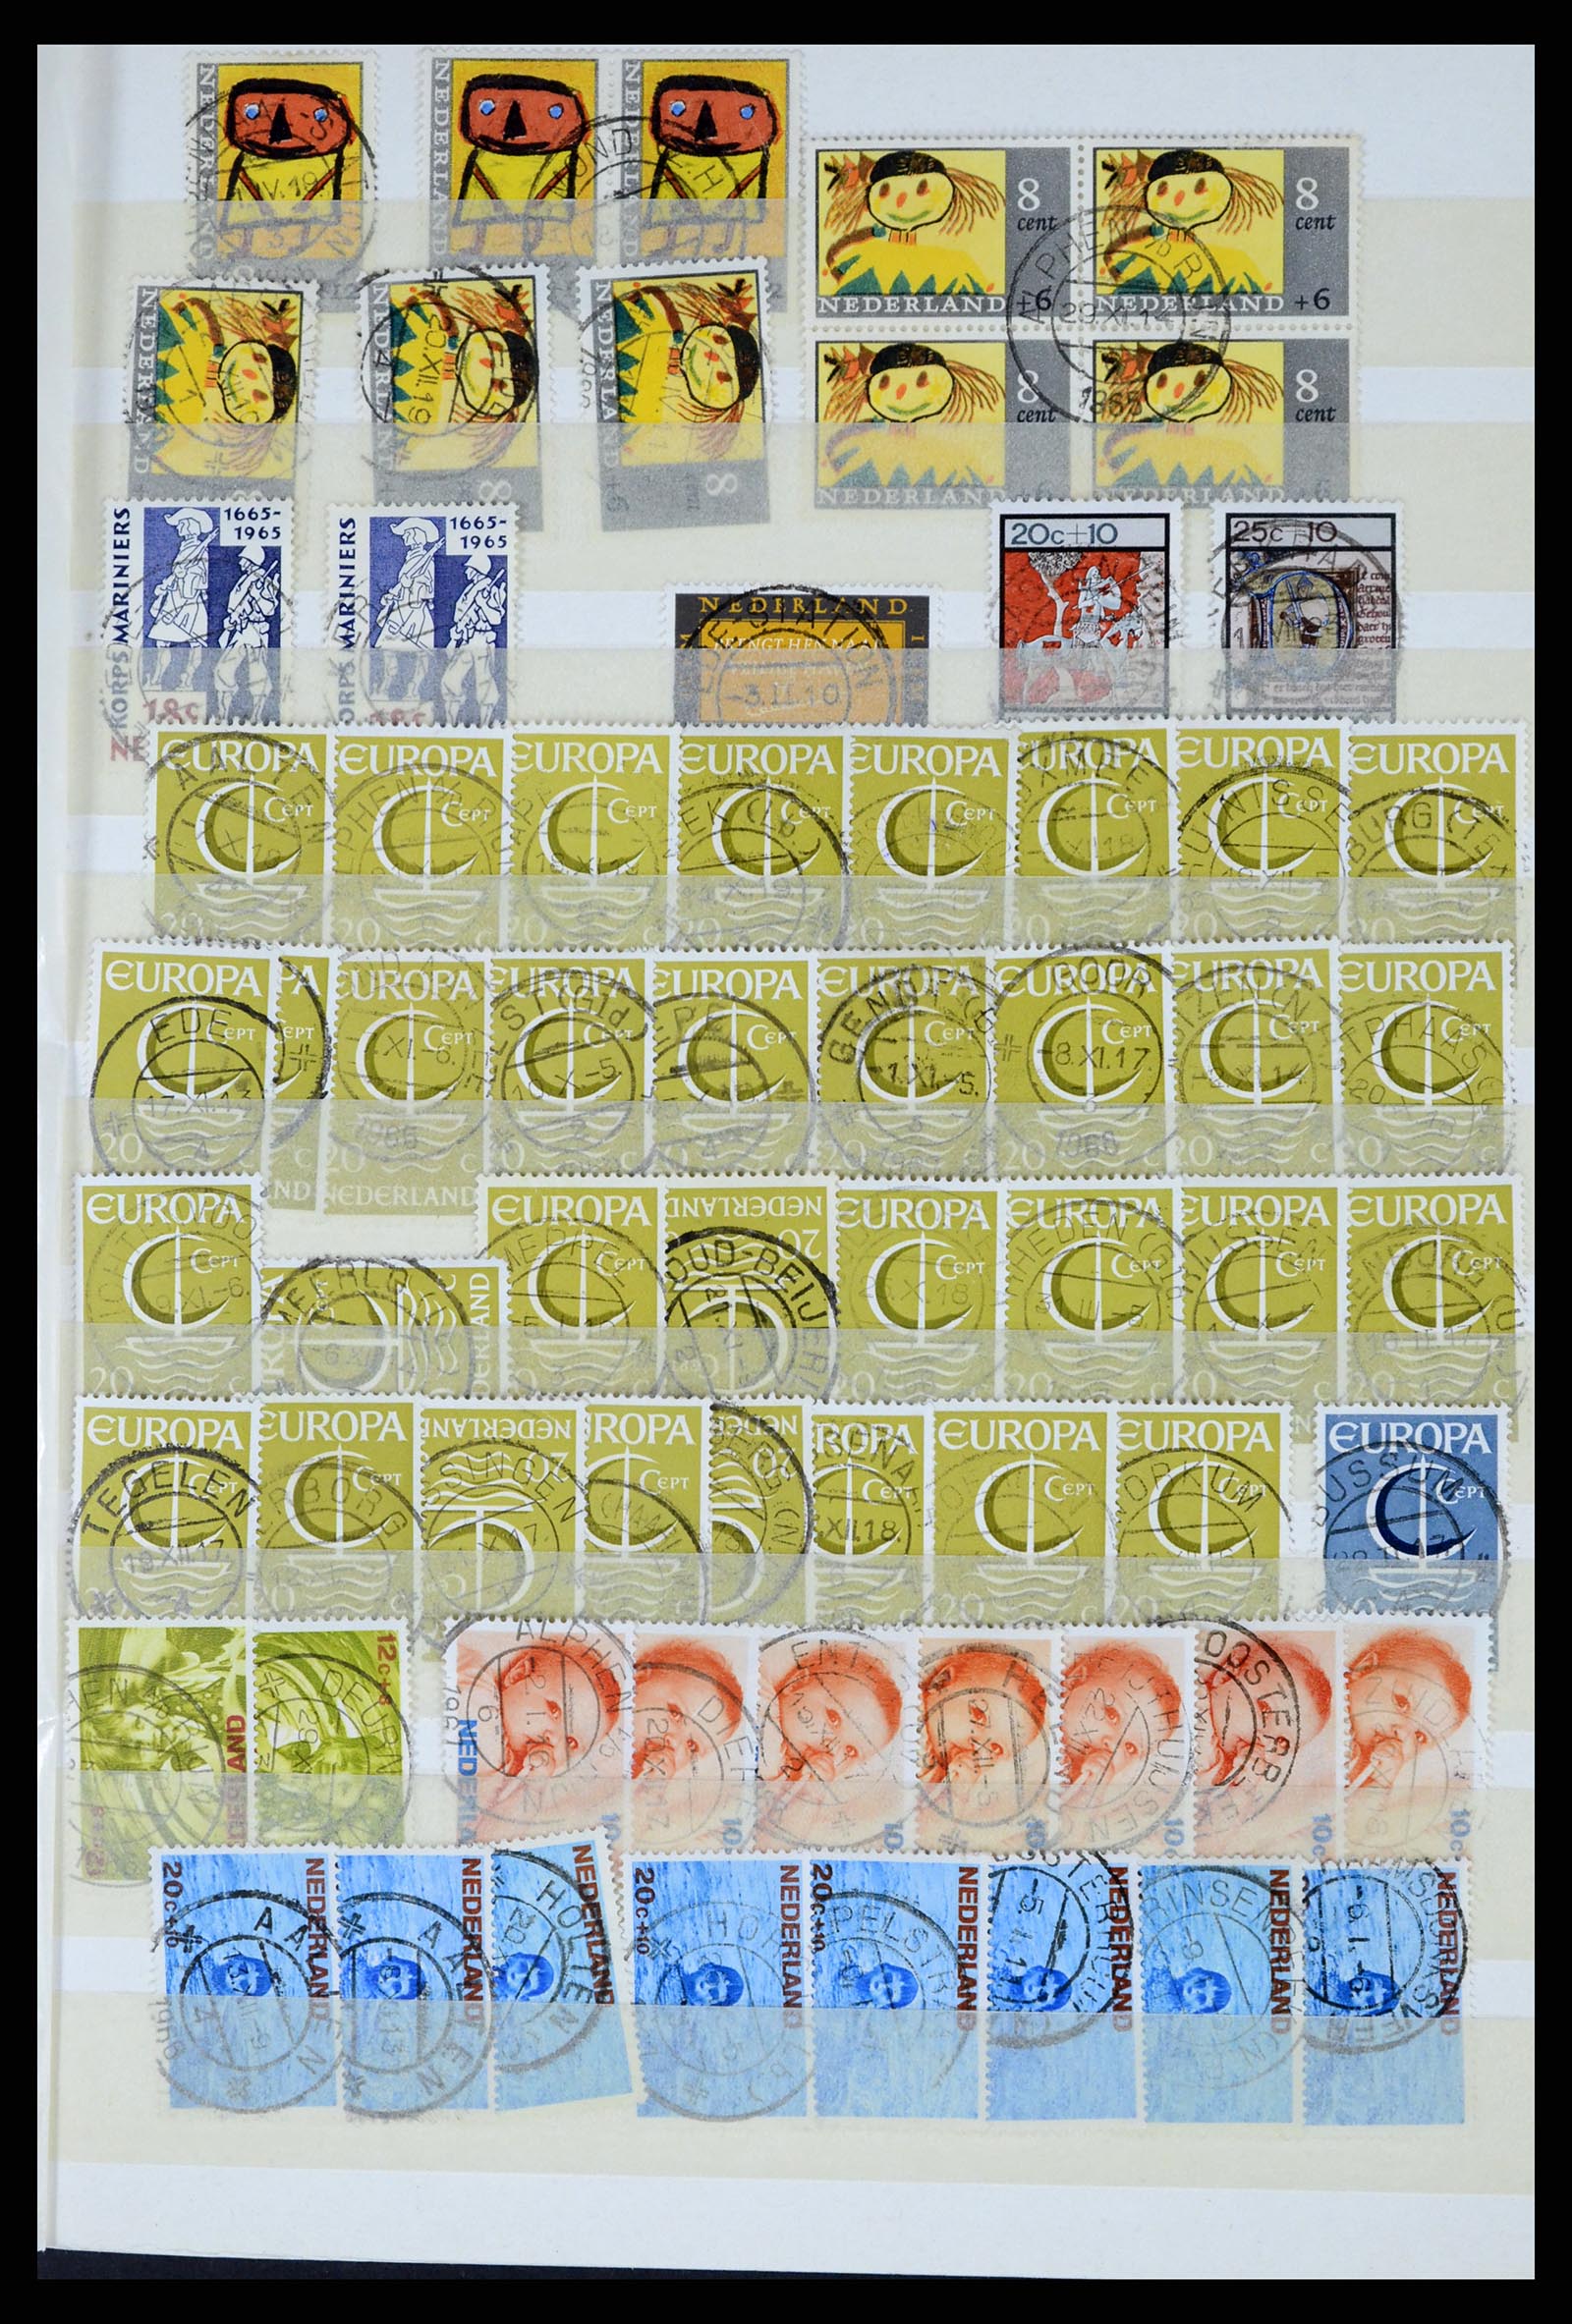 37424 059 - Stamp collection 37424 Netherlands shortbar cancels.